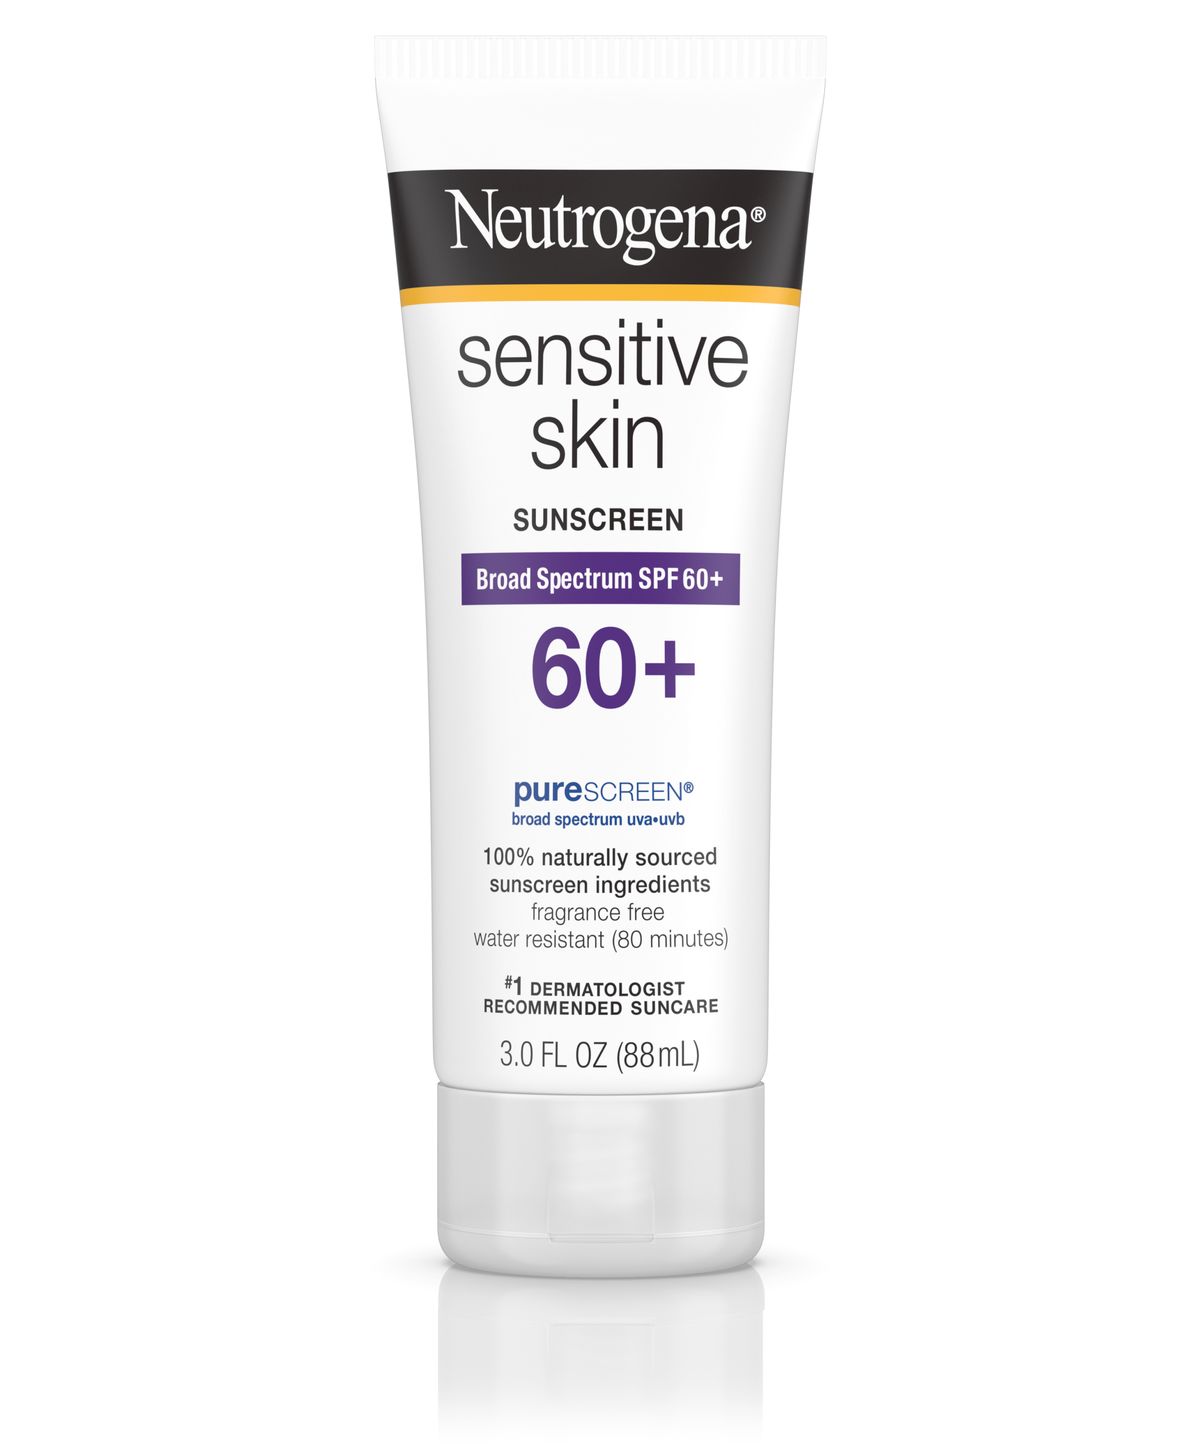 da mun san pham Kem chong nang Neutrogena Sensitive Skin SPF 60 neutroskincare - Da sau mụn: cần đầu tư những sản phẩm chăm sóc da nào?